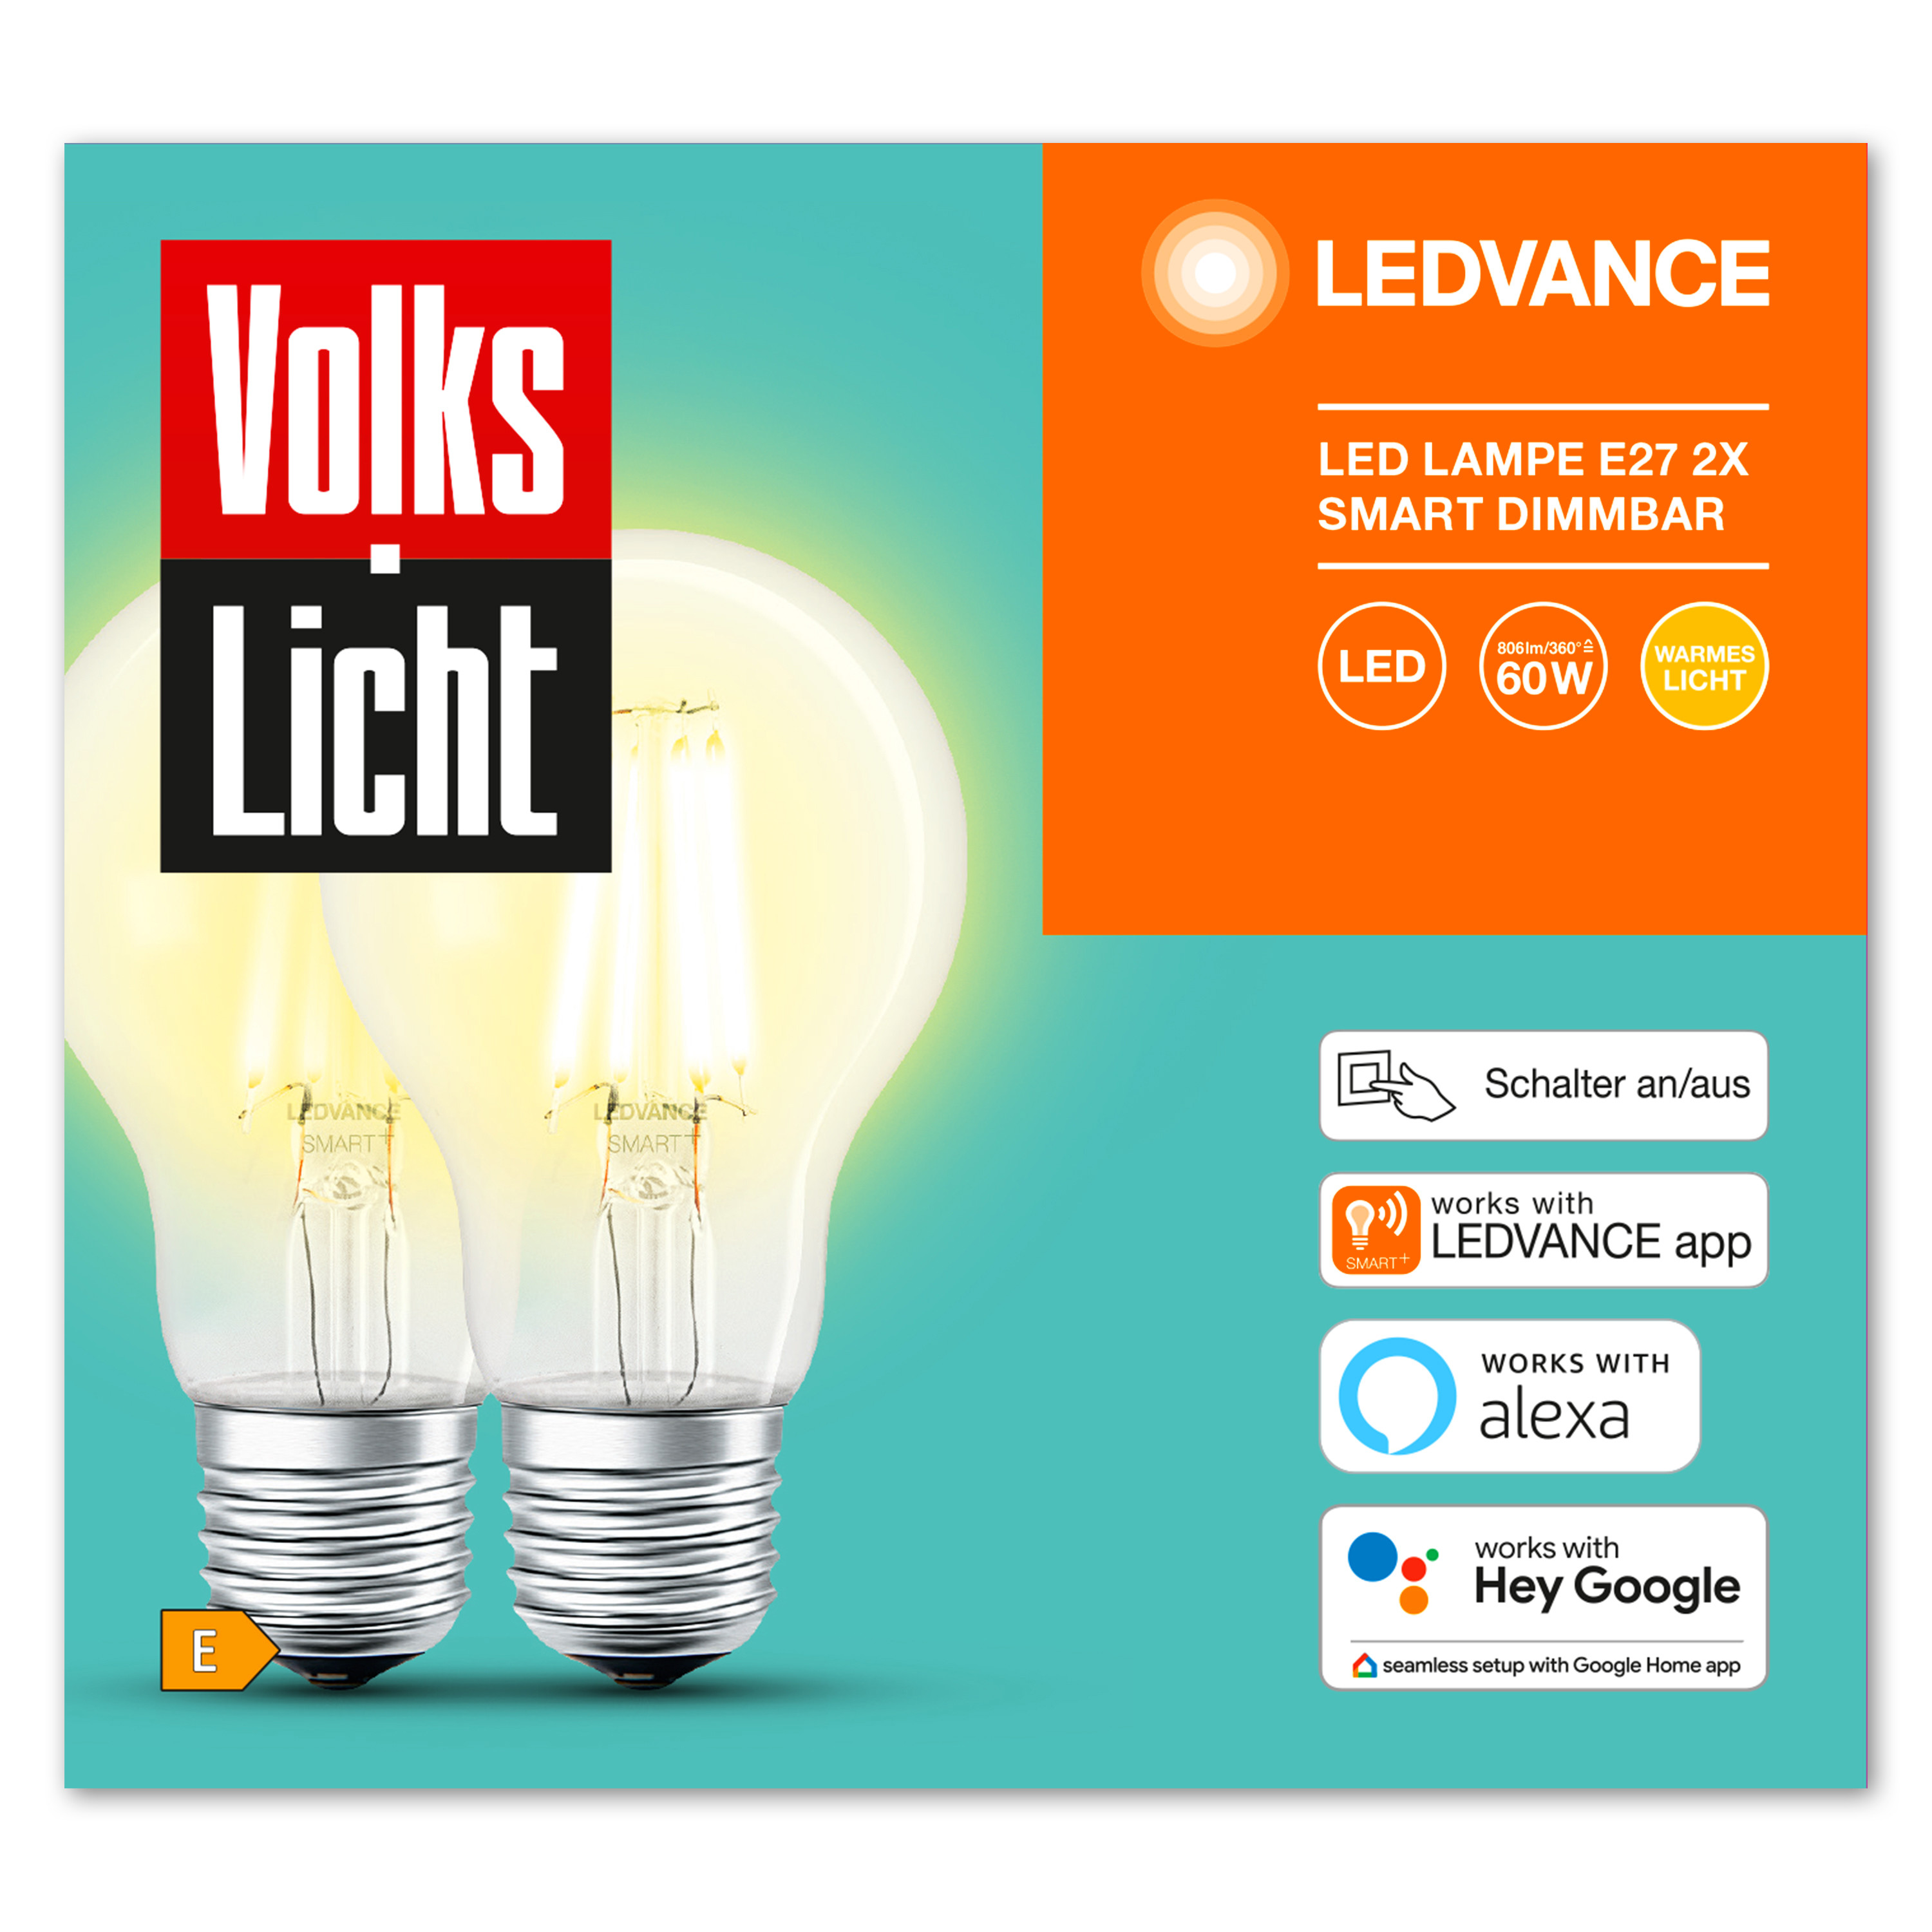 LEDVANCE VOLKSLICHT SMART+ Filament Classic Dimmable 806 LED Lumen Warmweiß Lampe